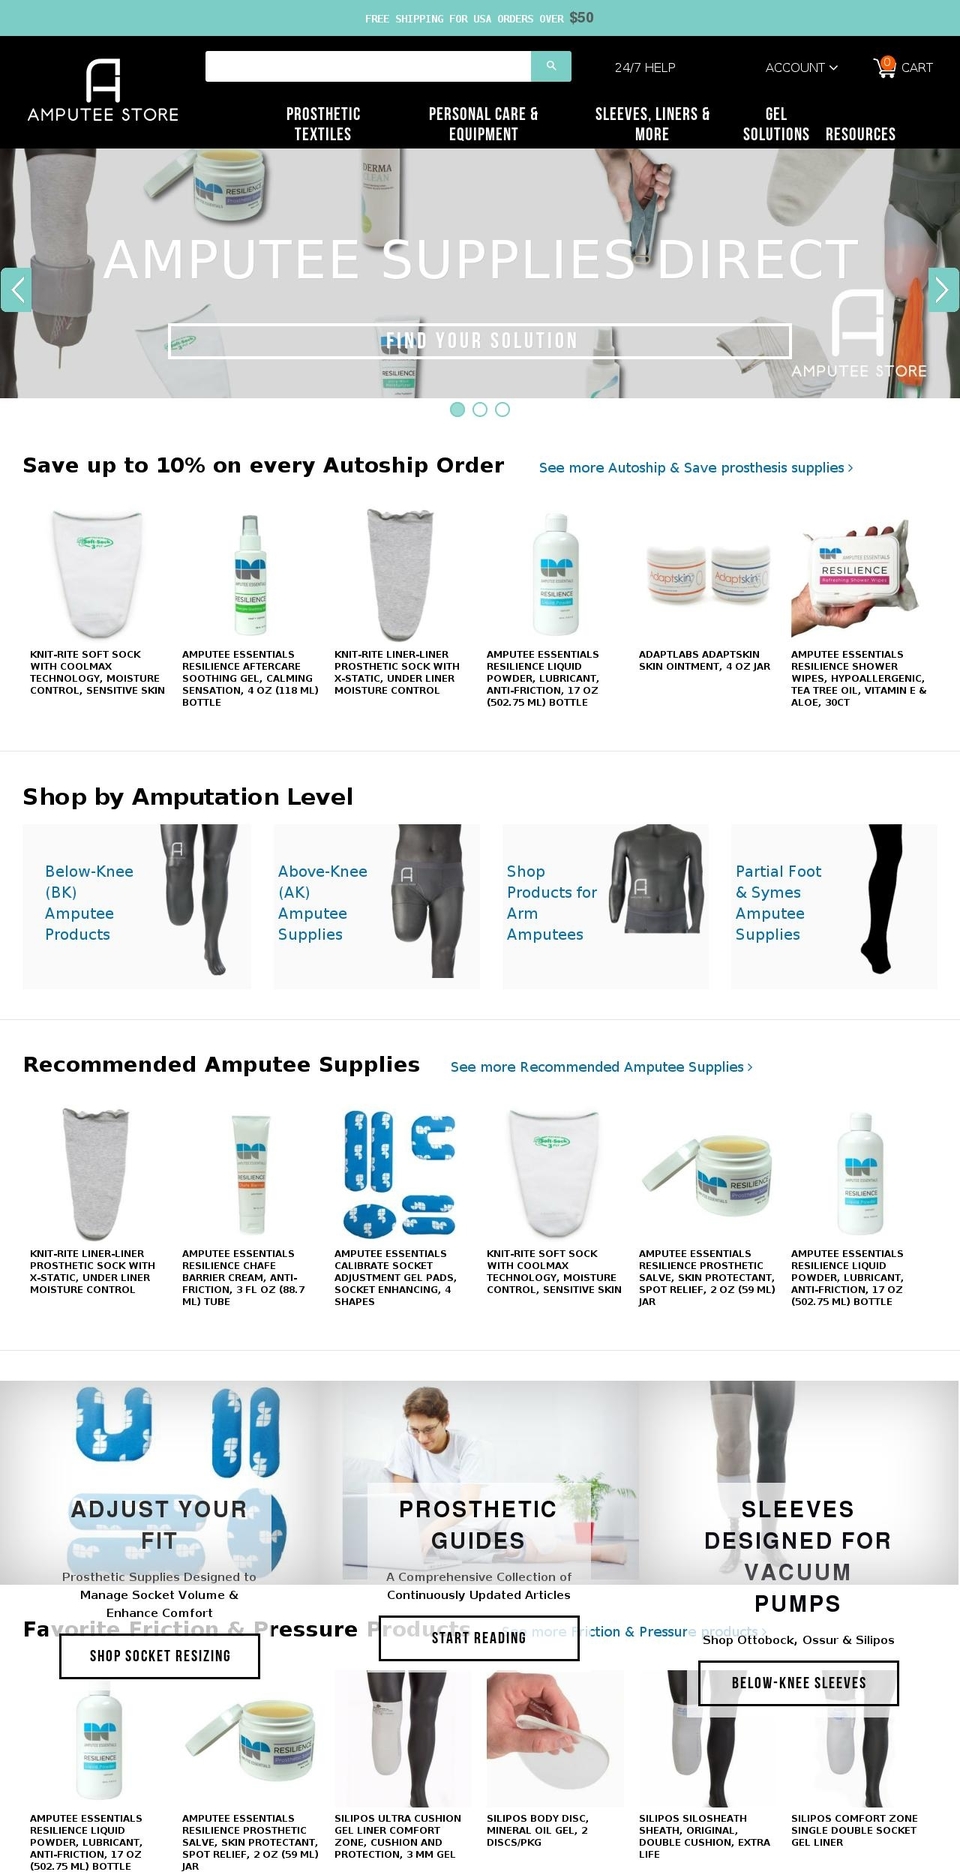 allamputee.info shopify website screenshot